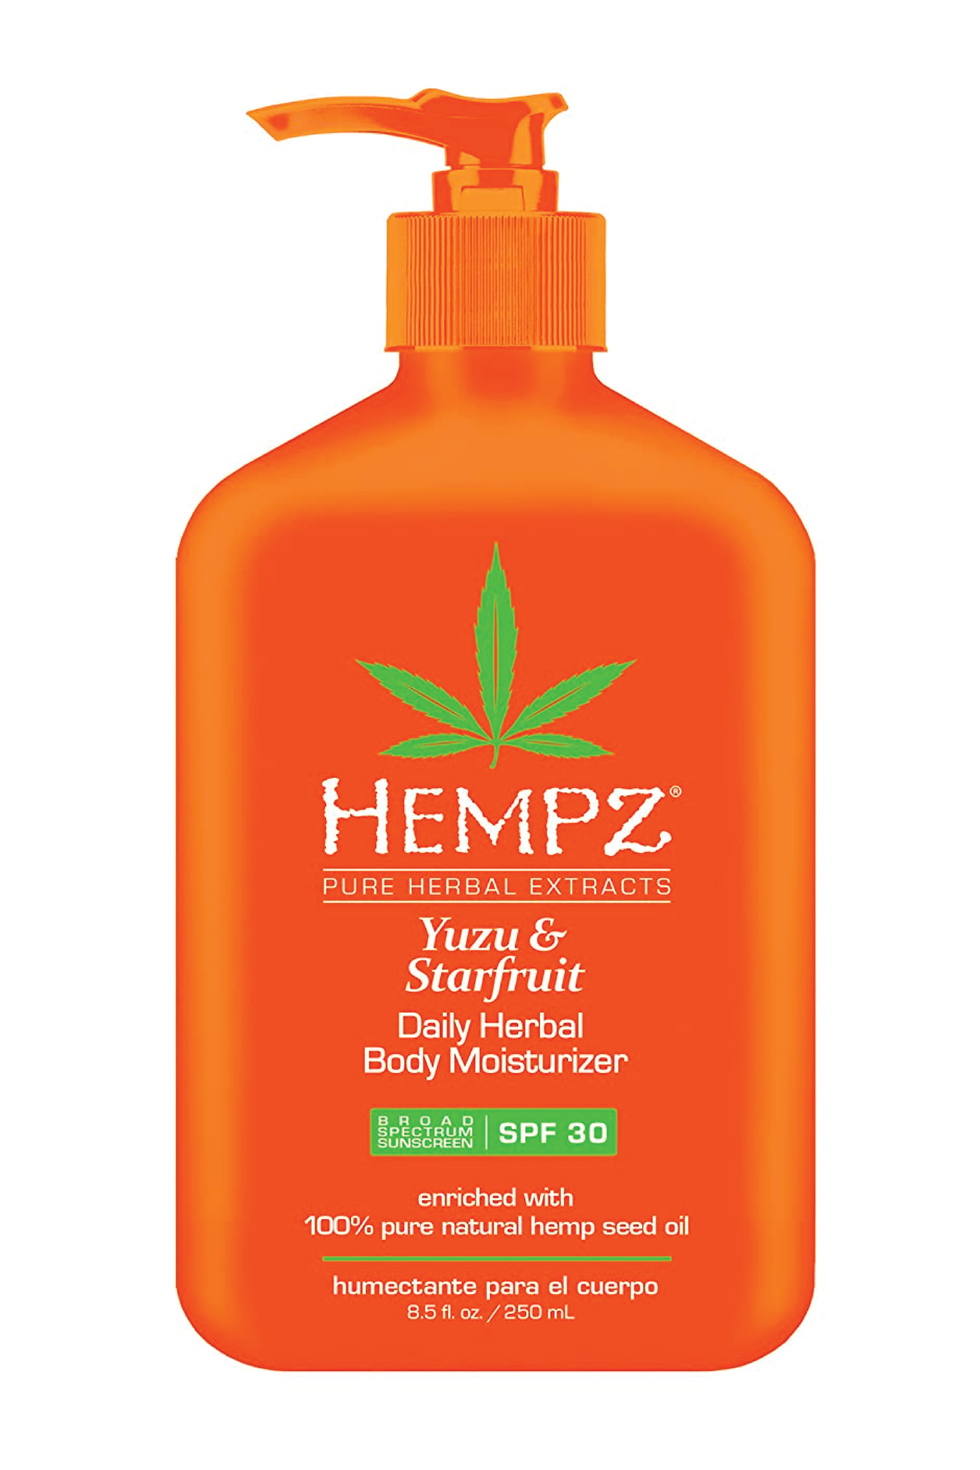 Hempz Yuzu & Starfruit Daily Herbal Lotion with Broad Spectrum SPF 30